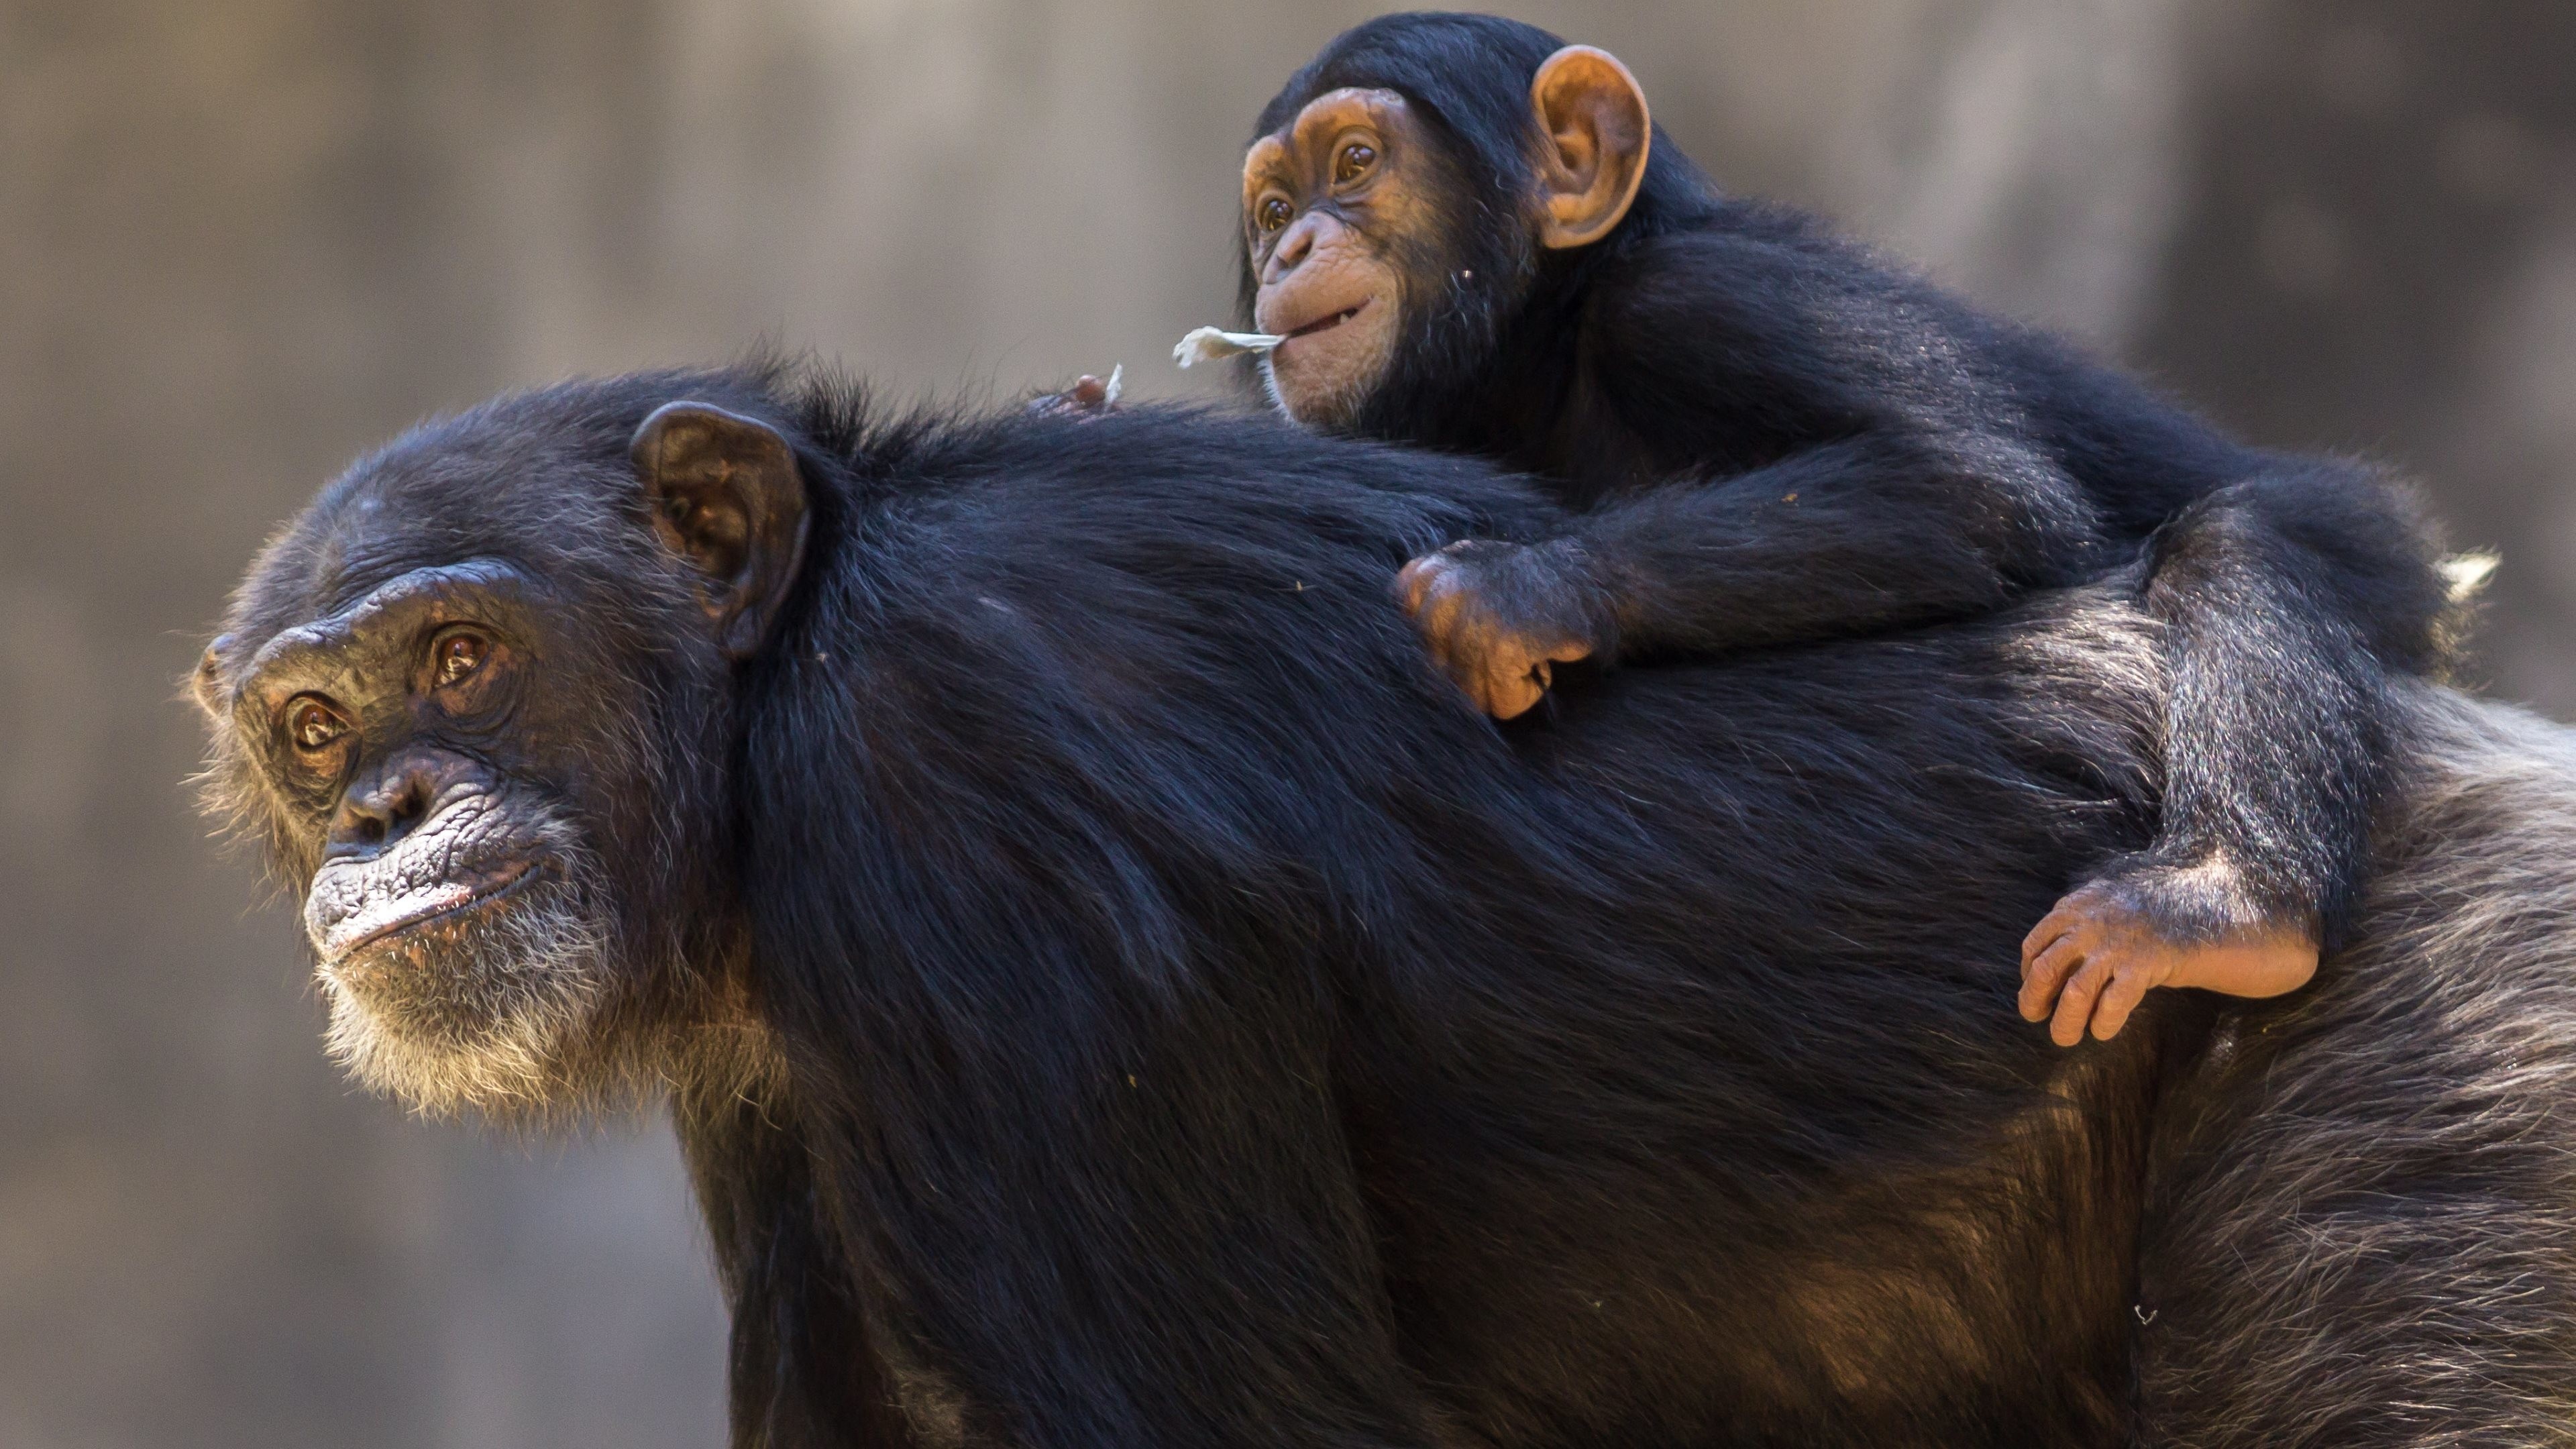 Chimpanzee portrait, Primate wonder, Animal wallpaper, 3840x2160 4K Desktop